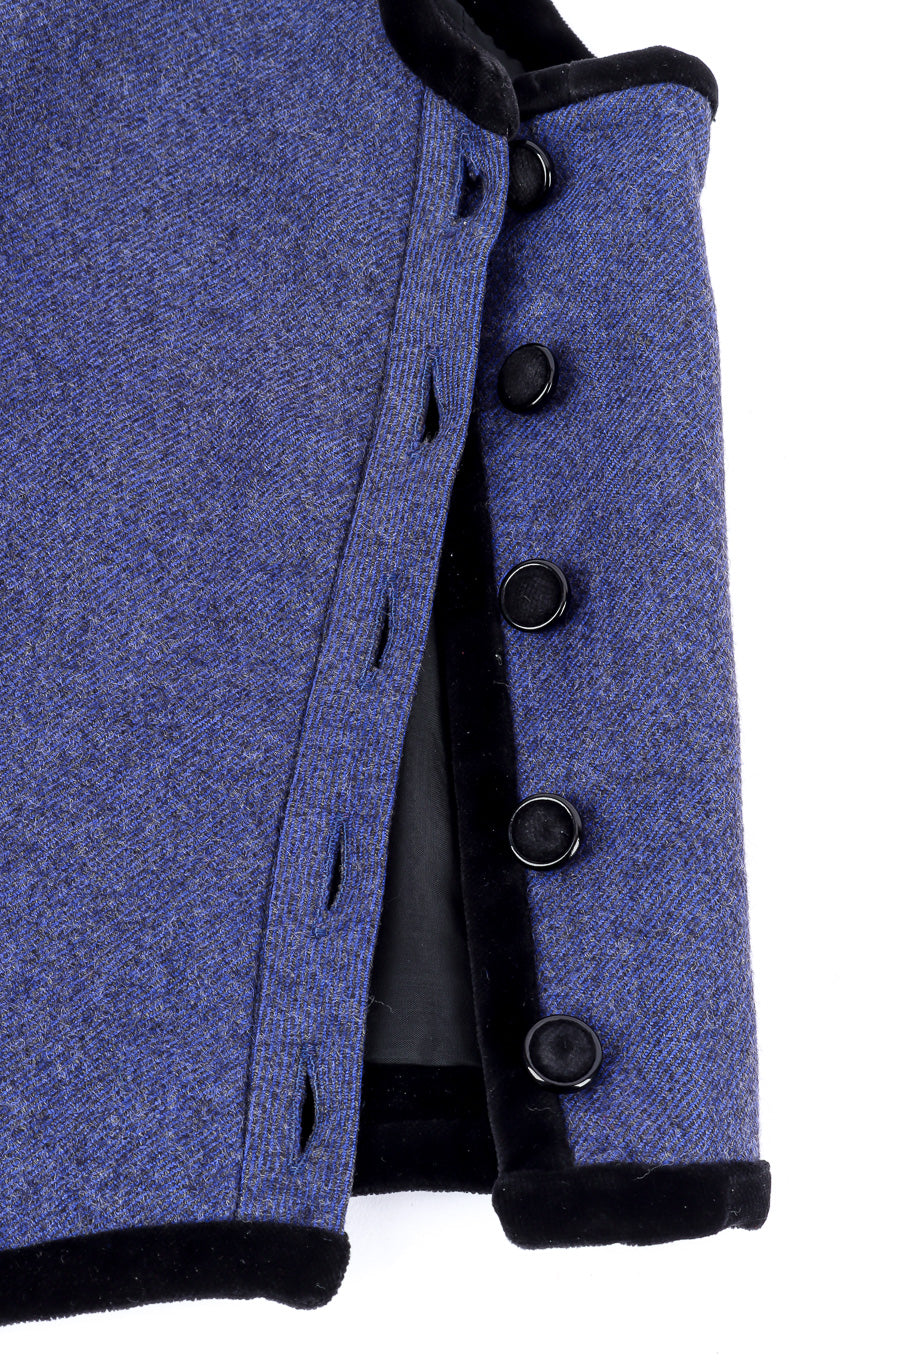 Valentino Boutique cotton denim top and skirt set side button details @recessla